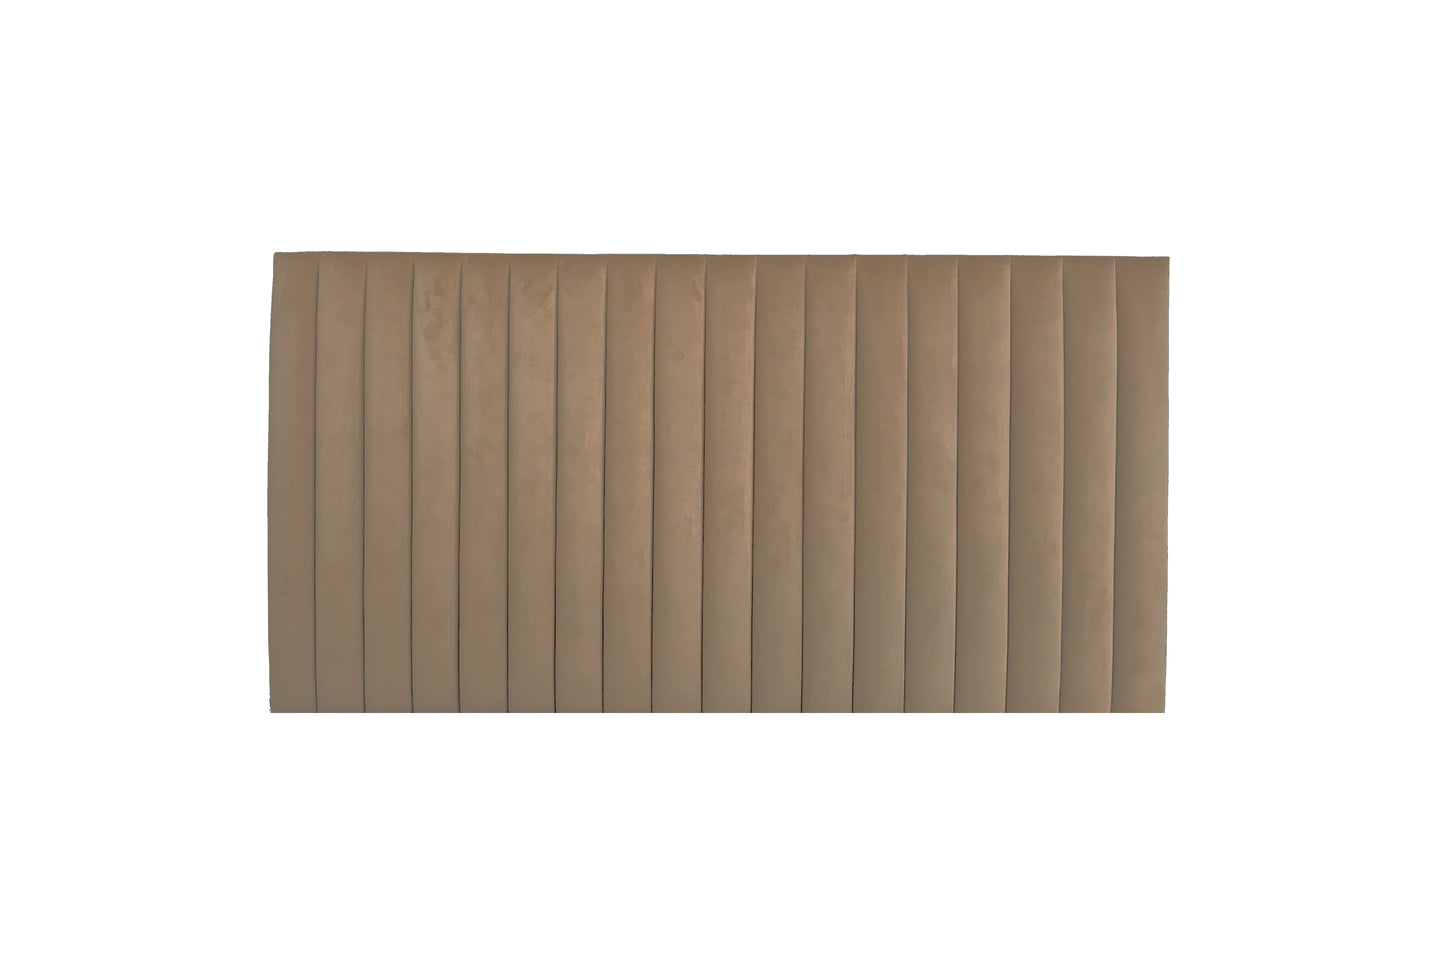 Boudor Narrow Headboard - Basics Fabric - Elula Furniture